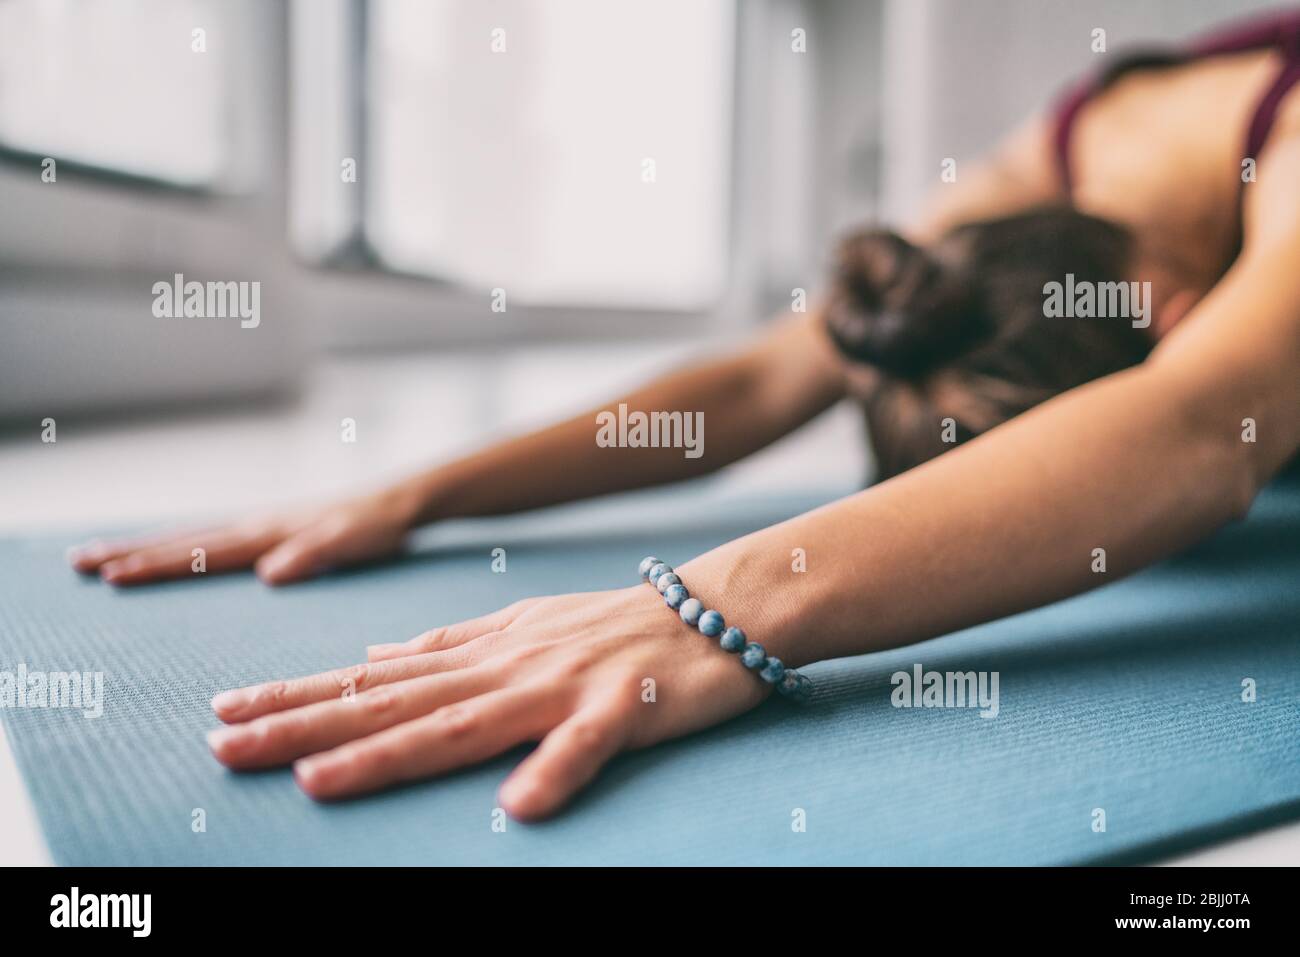 Yoga Meditation Wellness Hintergrund - Frau tun Kinder Pose Stretch auf Trainingsmatte - Training Fitness-Klasse zu Hause oder Fitness-Studio aktives Leben. Stockfoto